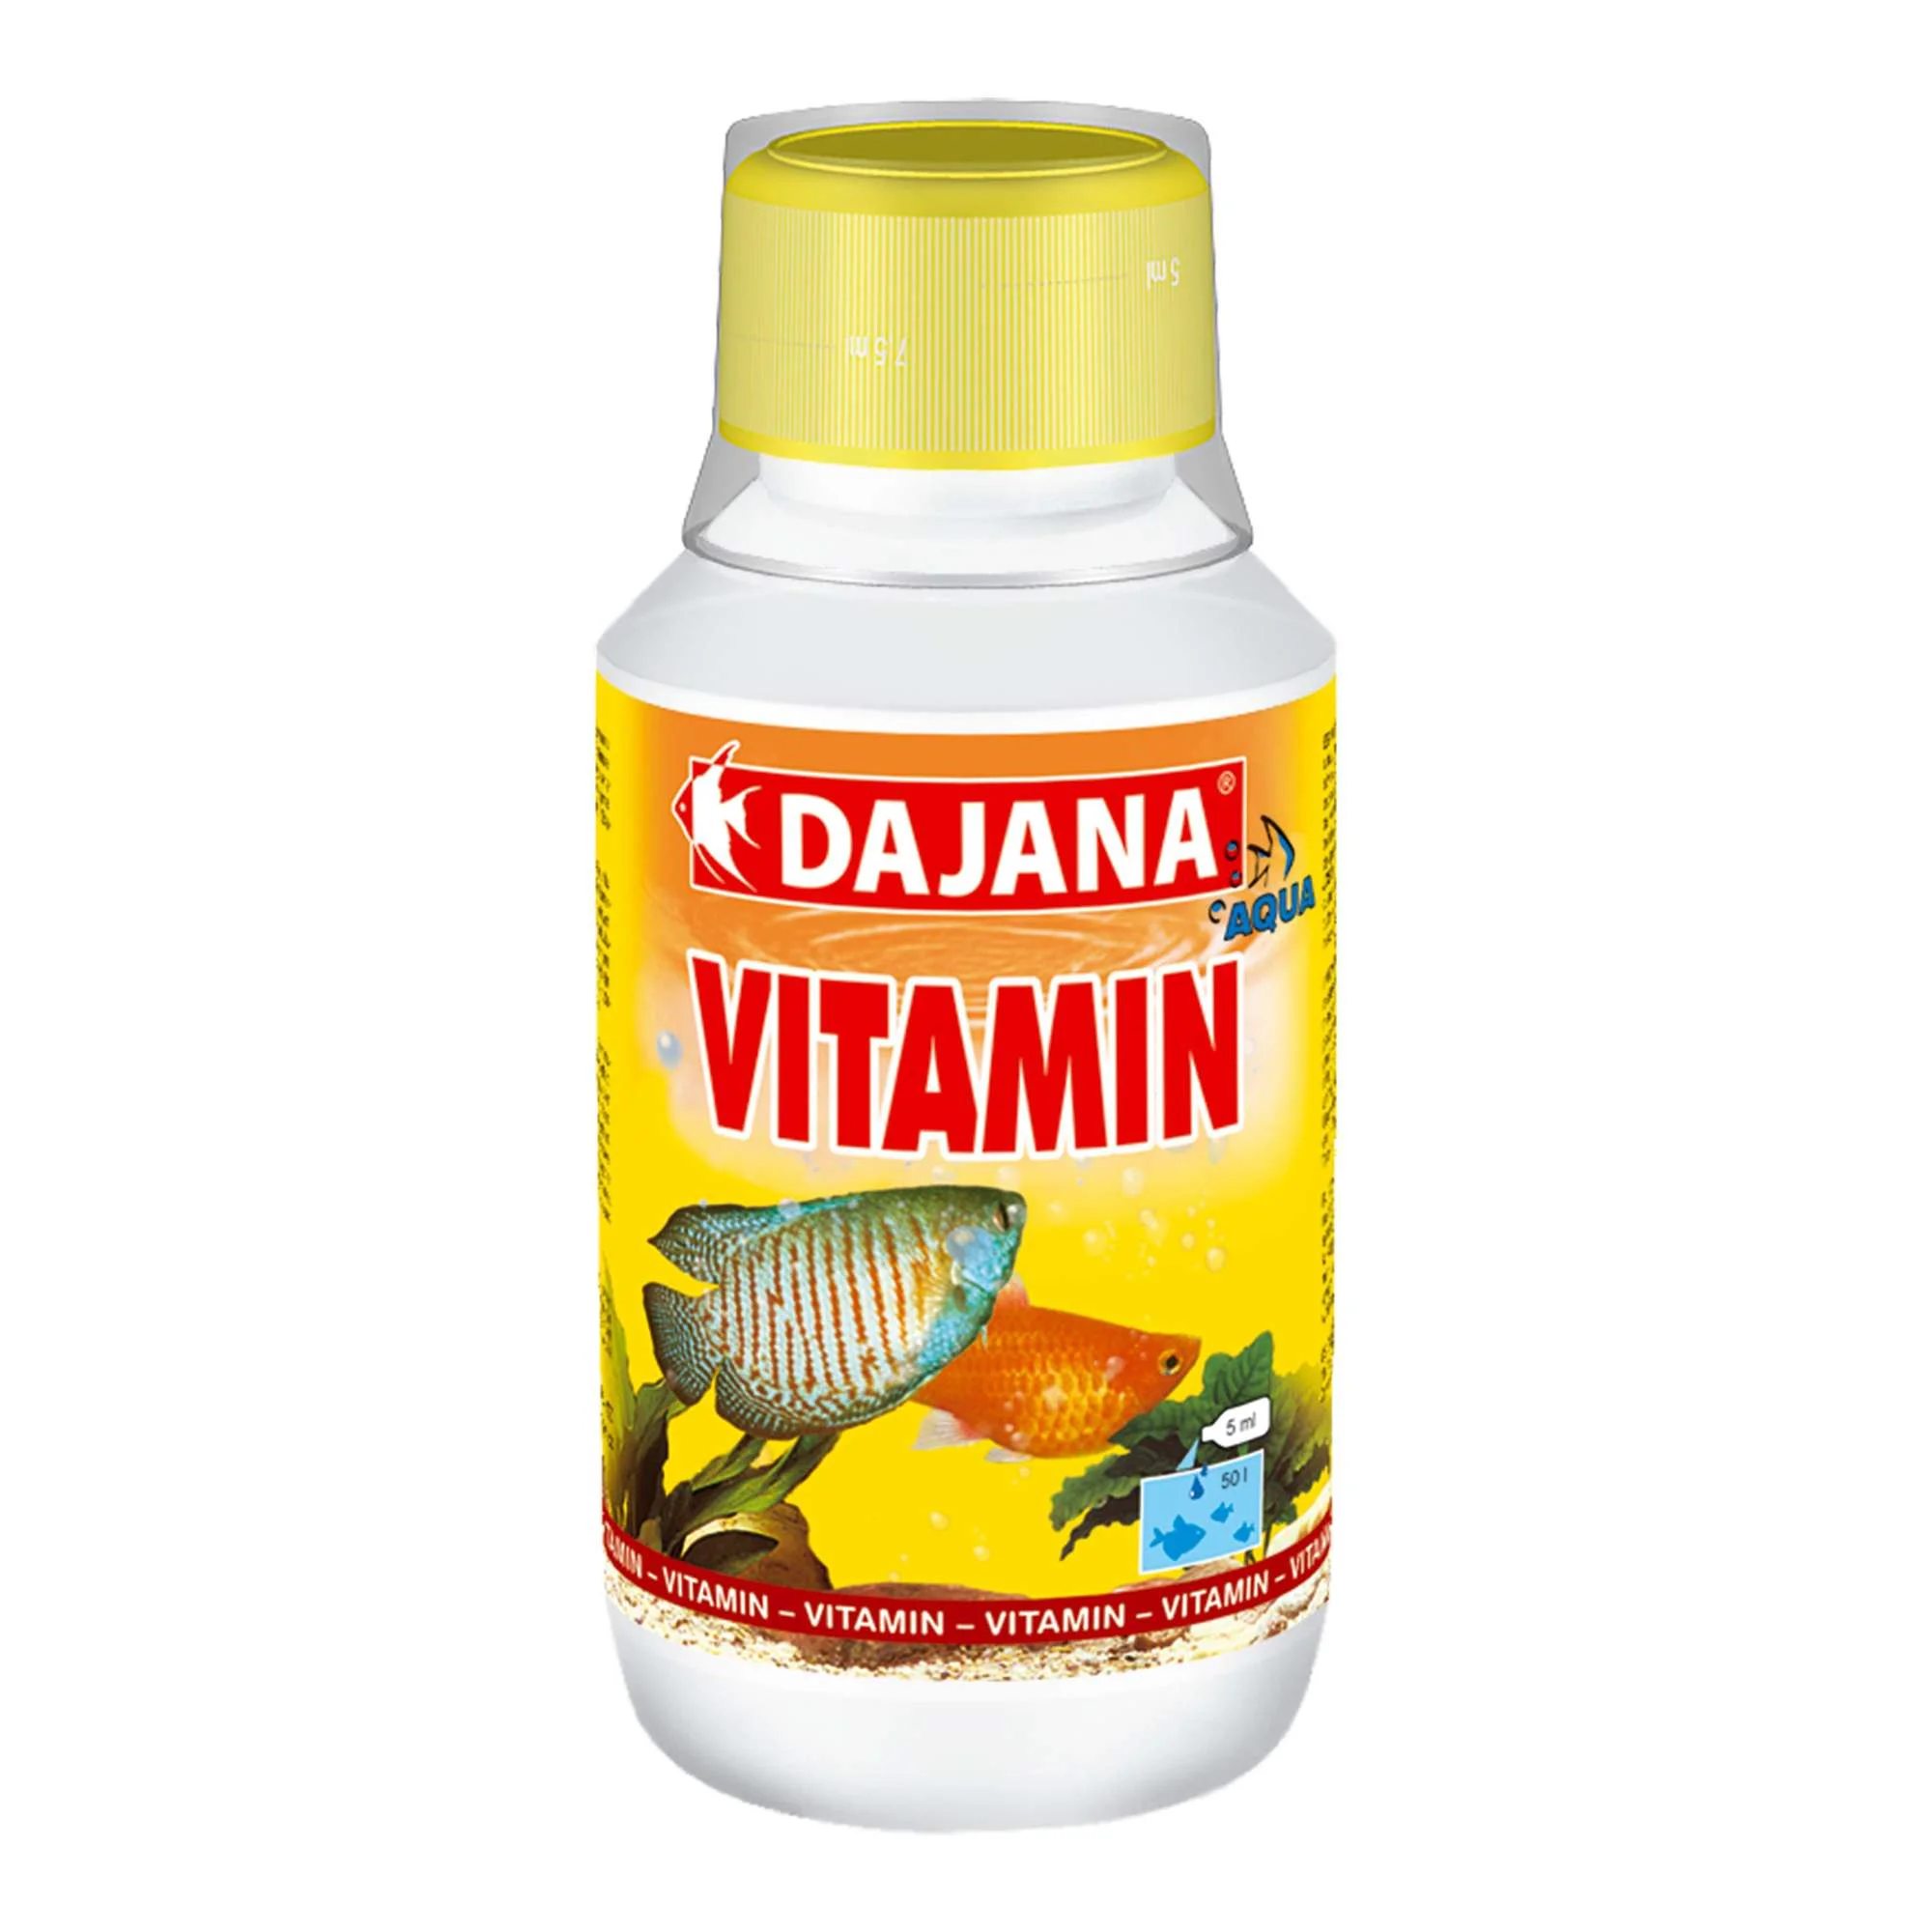 dj8388-acondicionador-vitamin-de-dajana-100-ml_general_1326.jpg